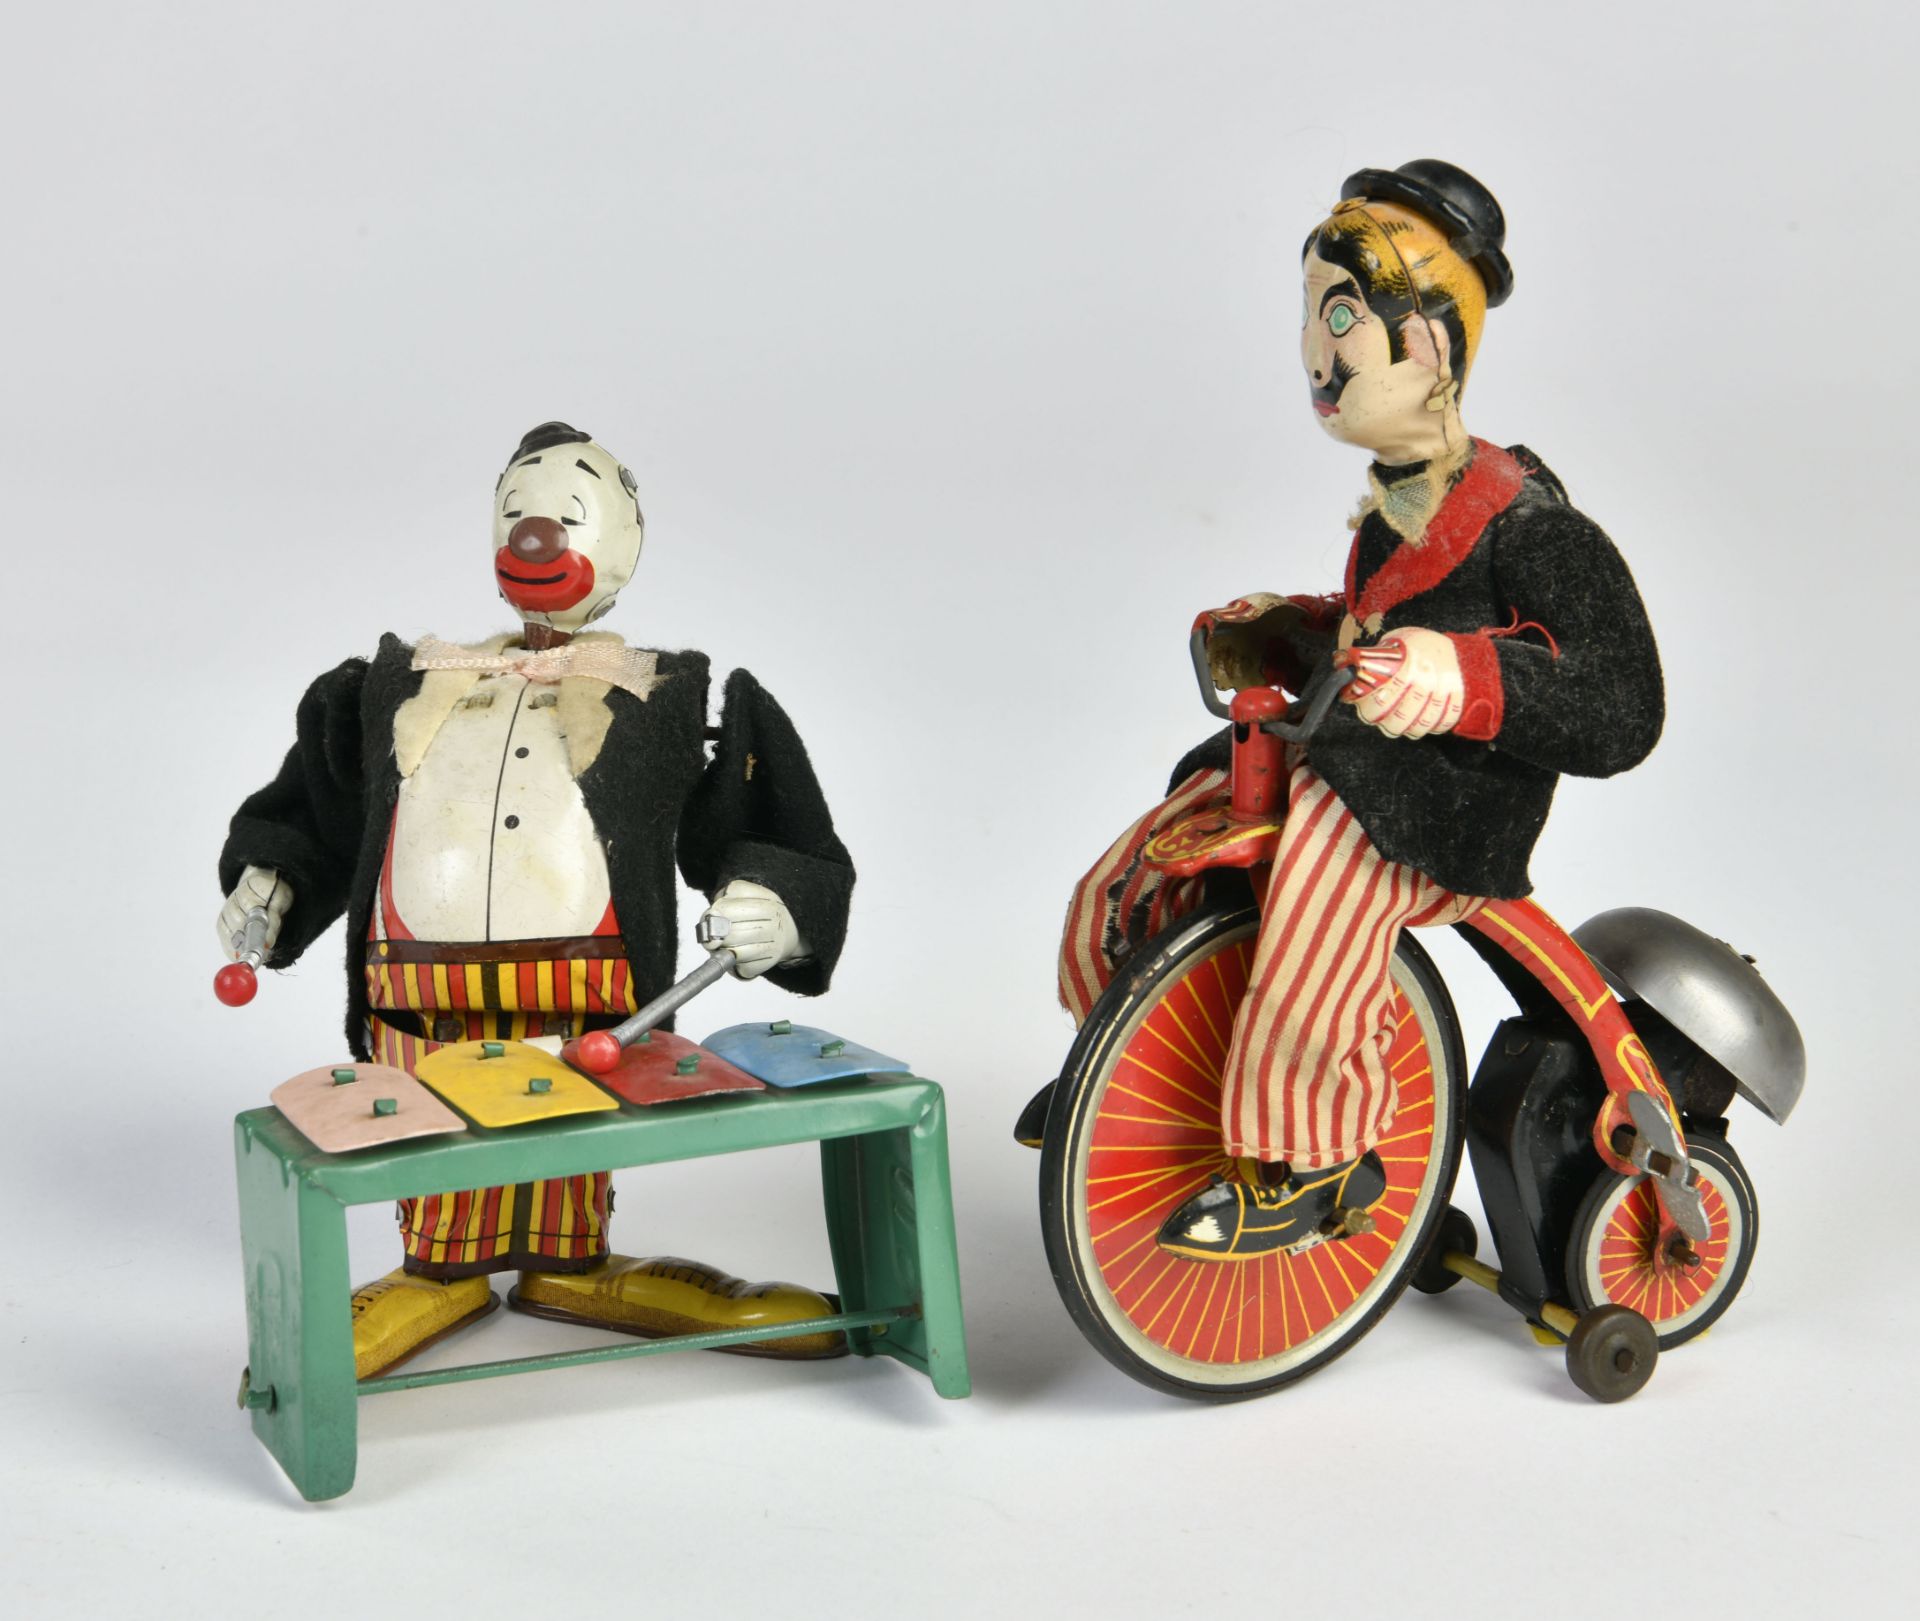 TPS, clown on cycle & musician clown, Japan, cw ok, paint d., C 2